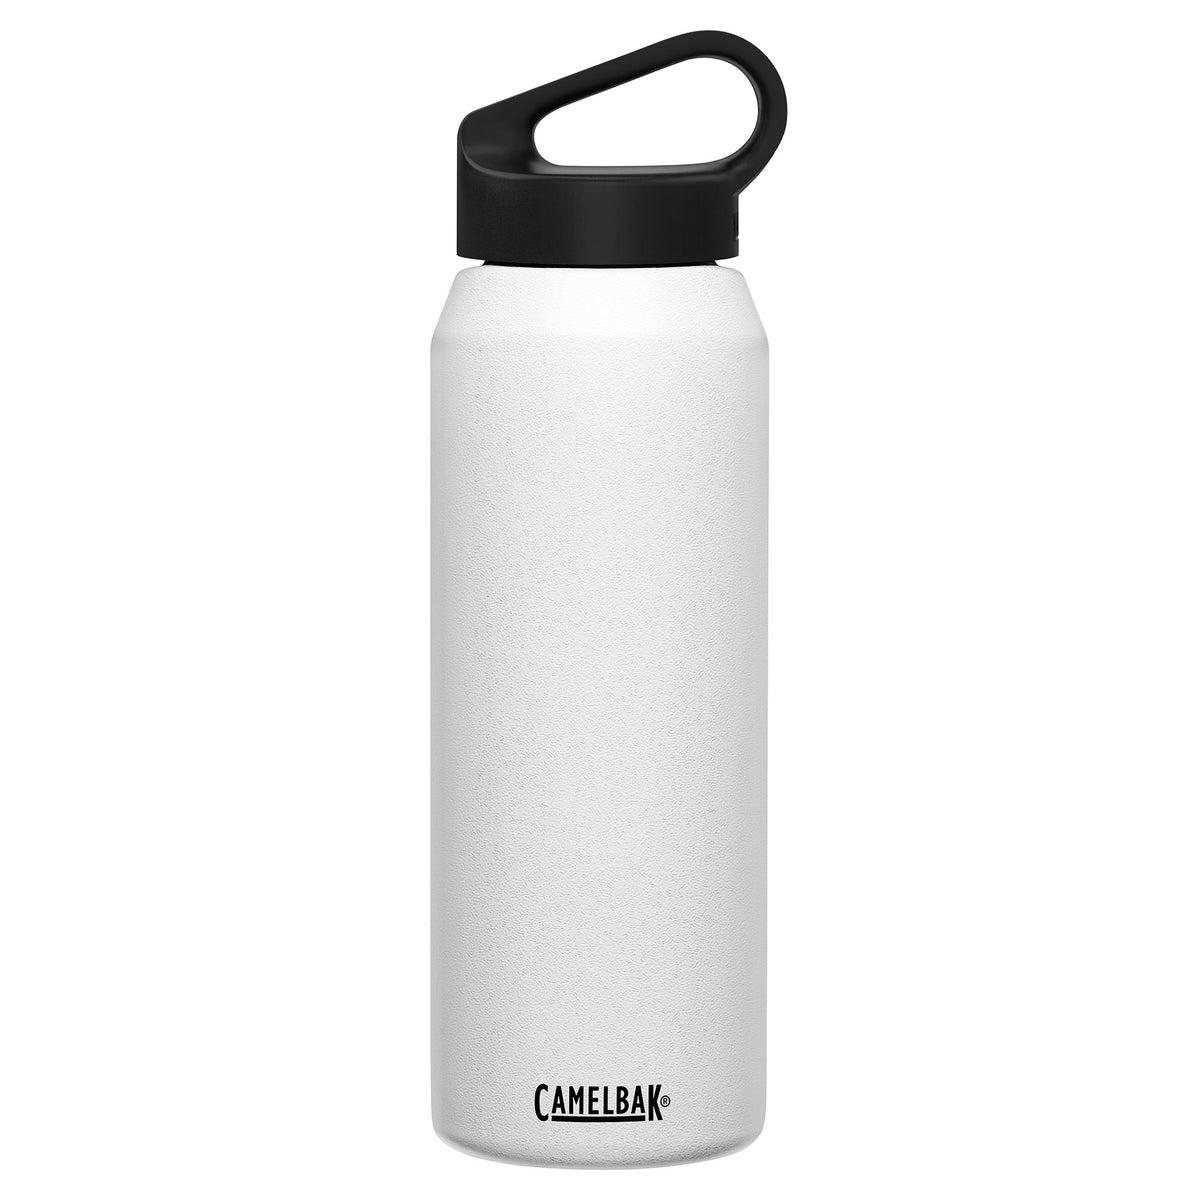 Camelbak Carry Cap Sst Vacuum Insulated 1L